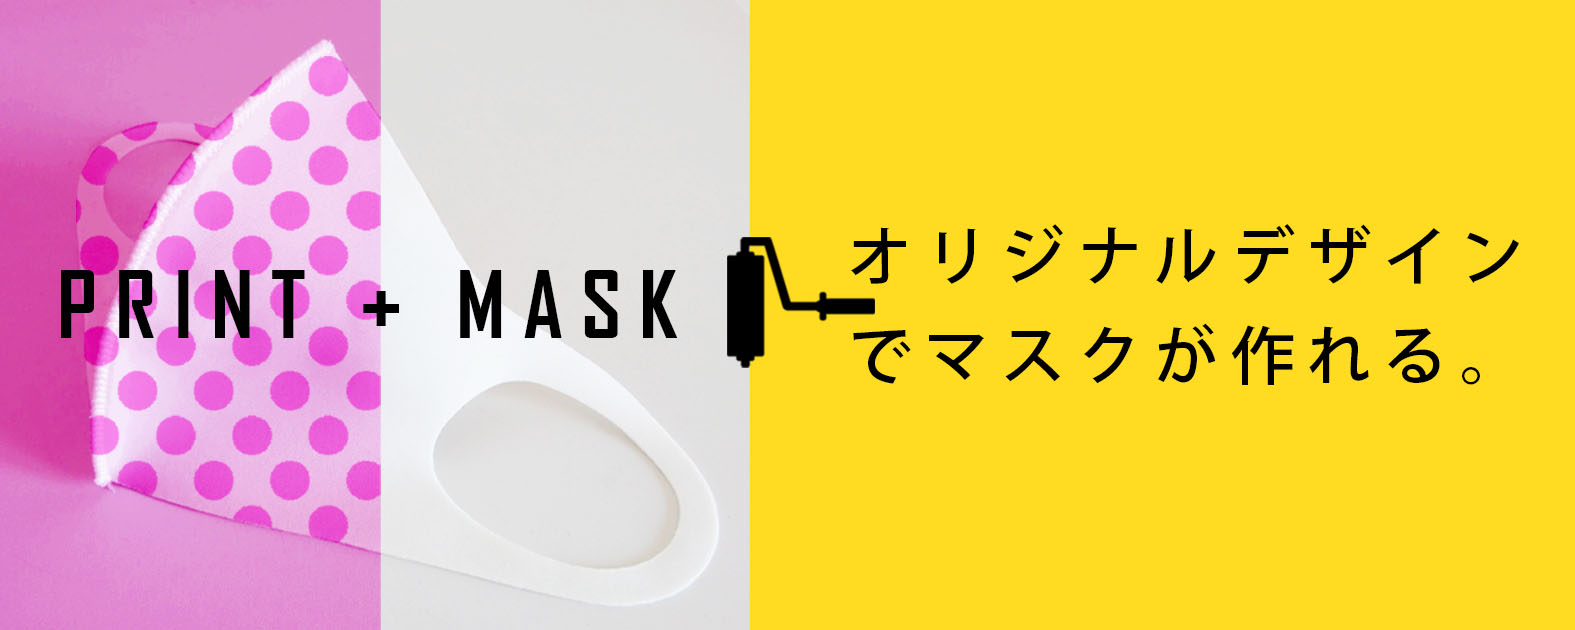 original-orint-mask